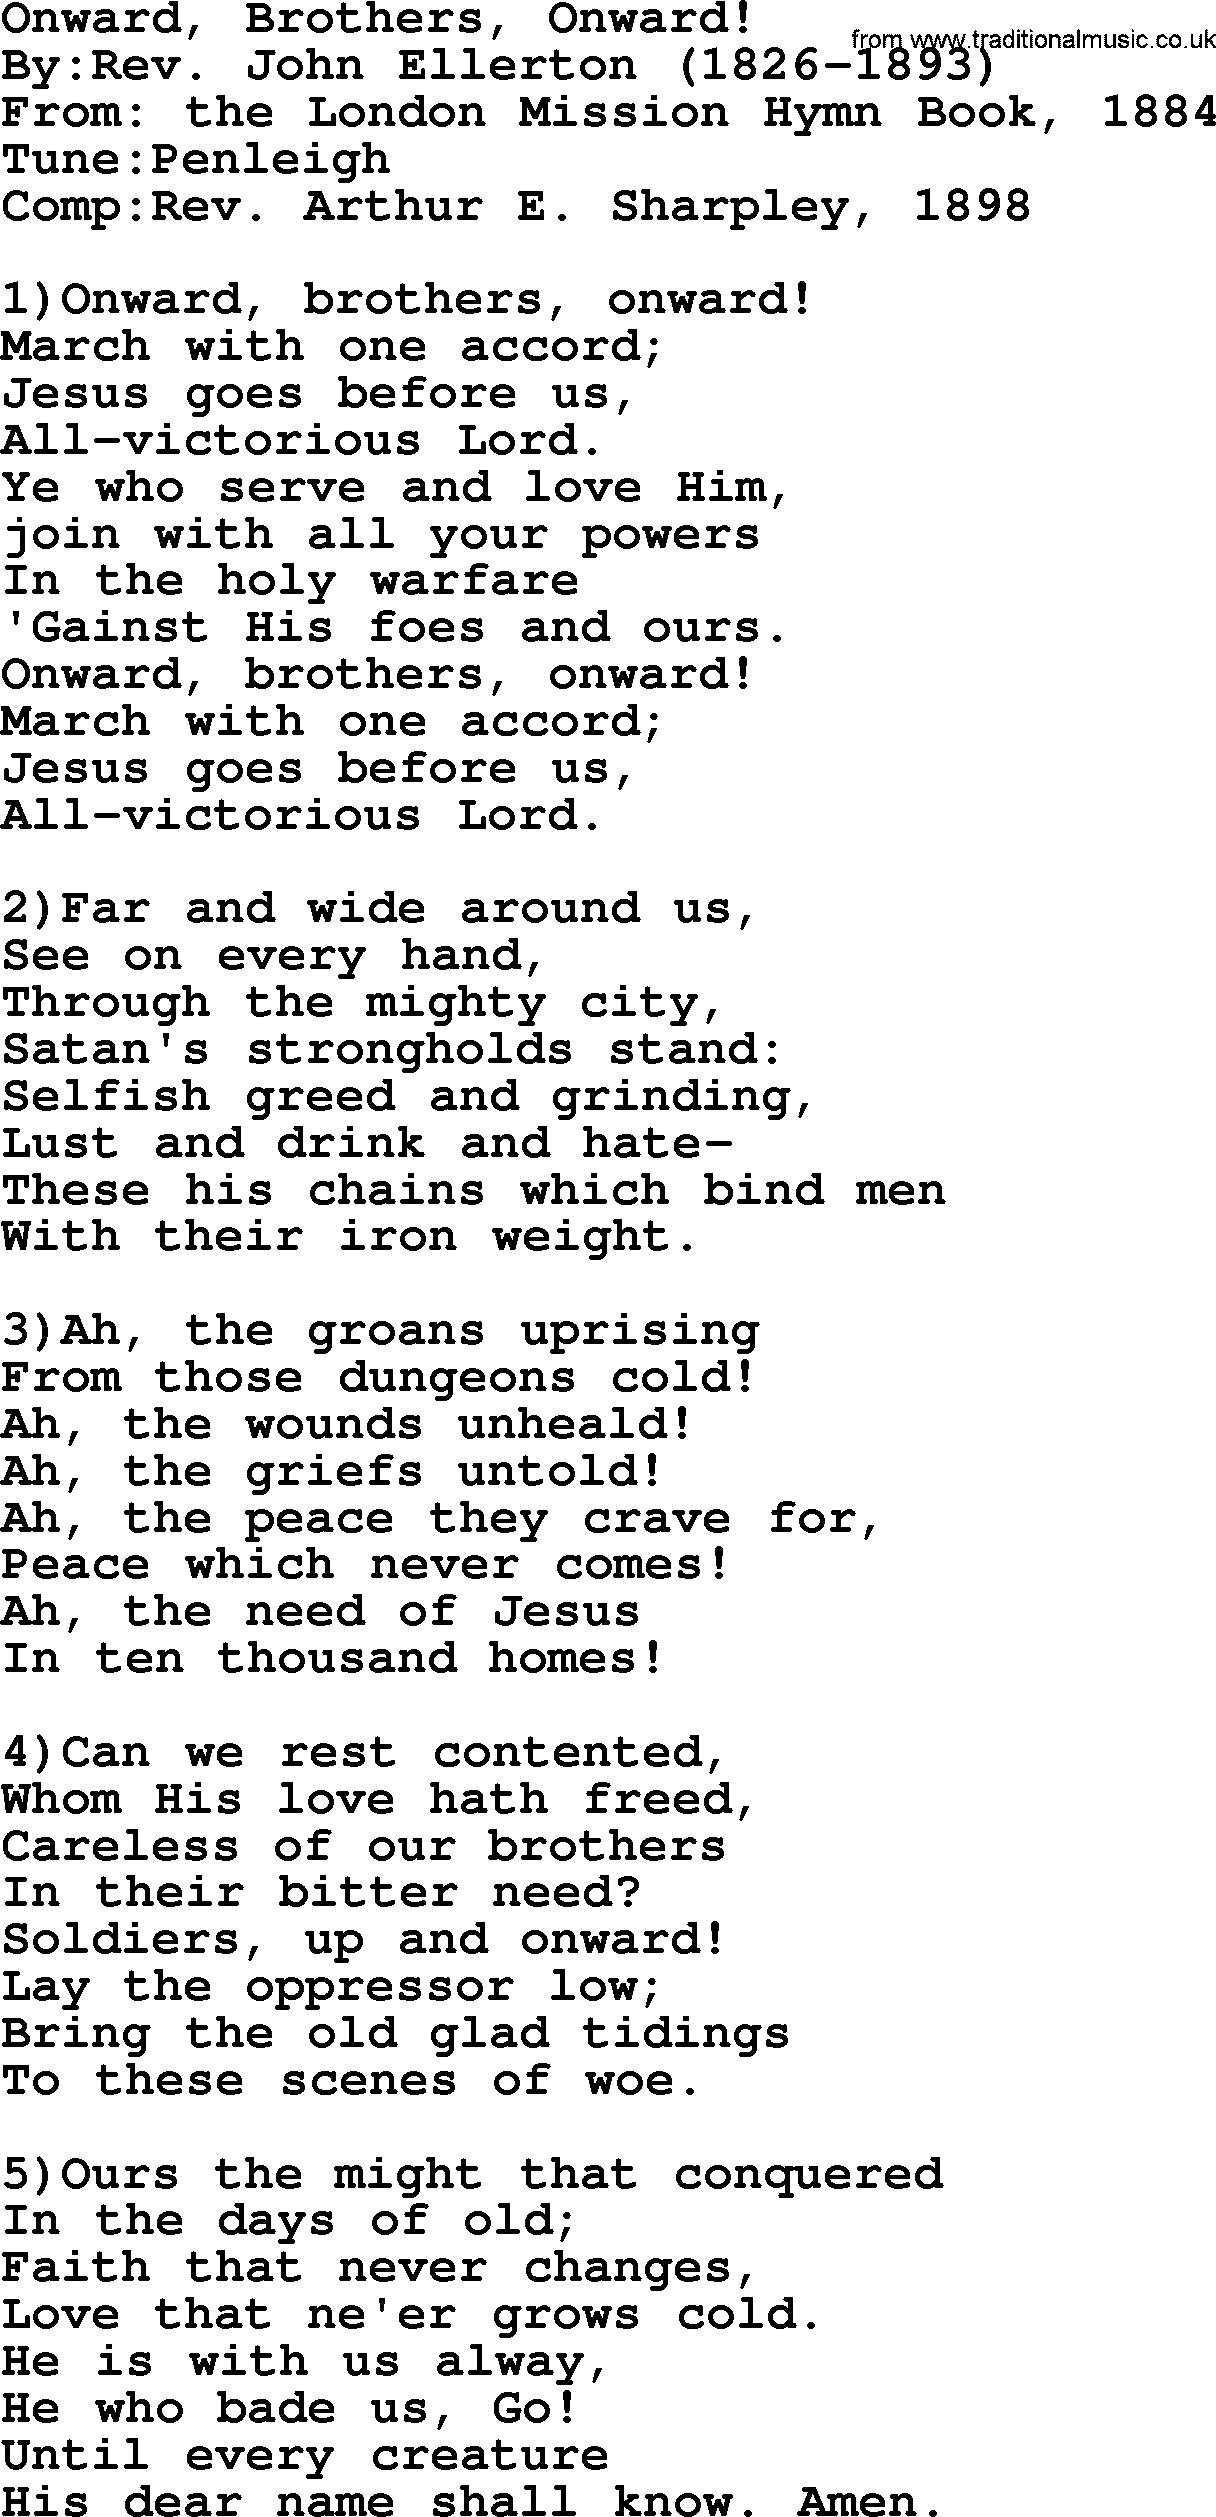 Methodist Hymn: Onward, Brothers, Onward!, lyrics